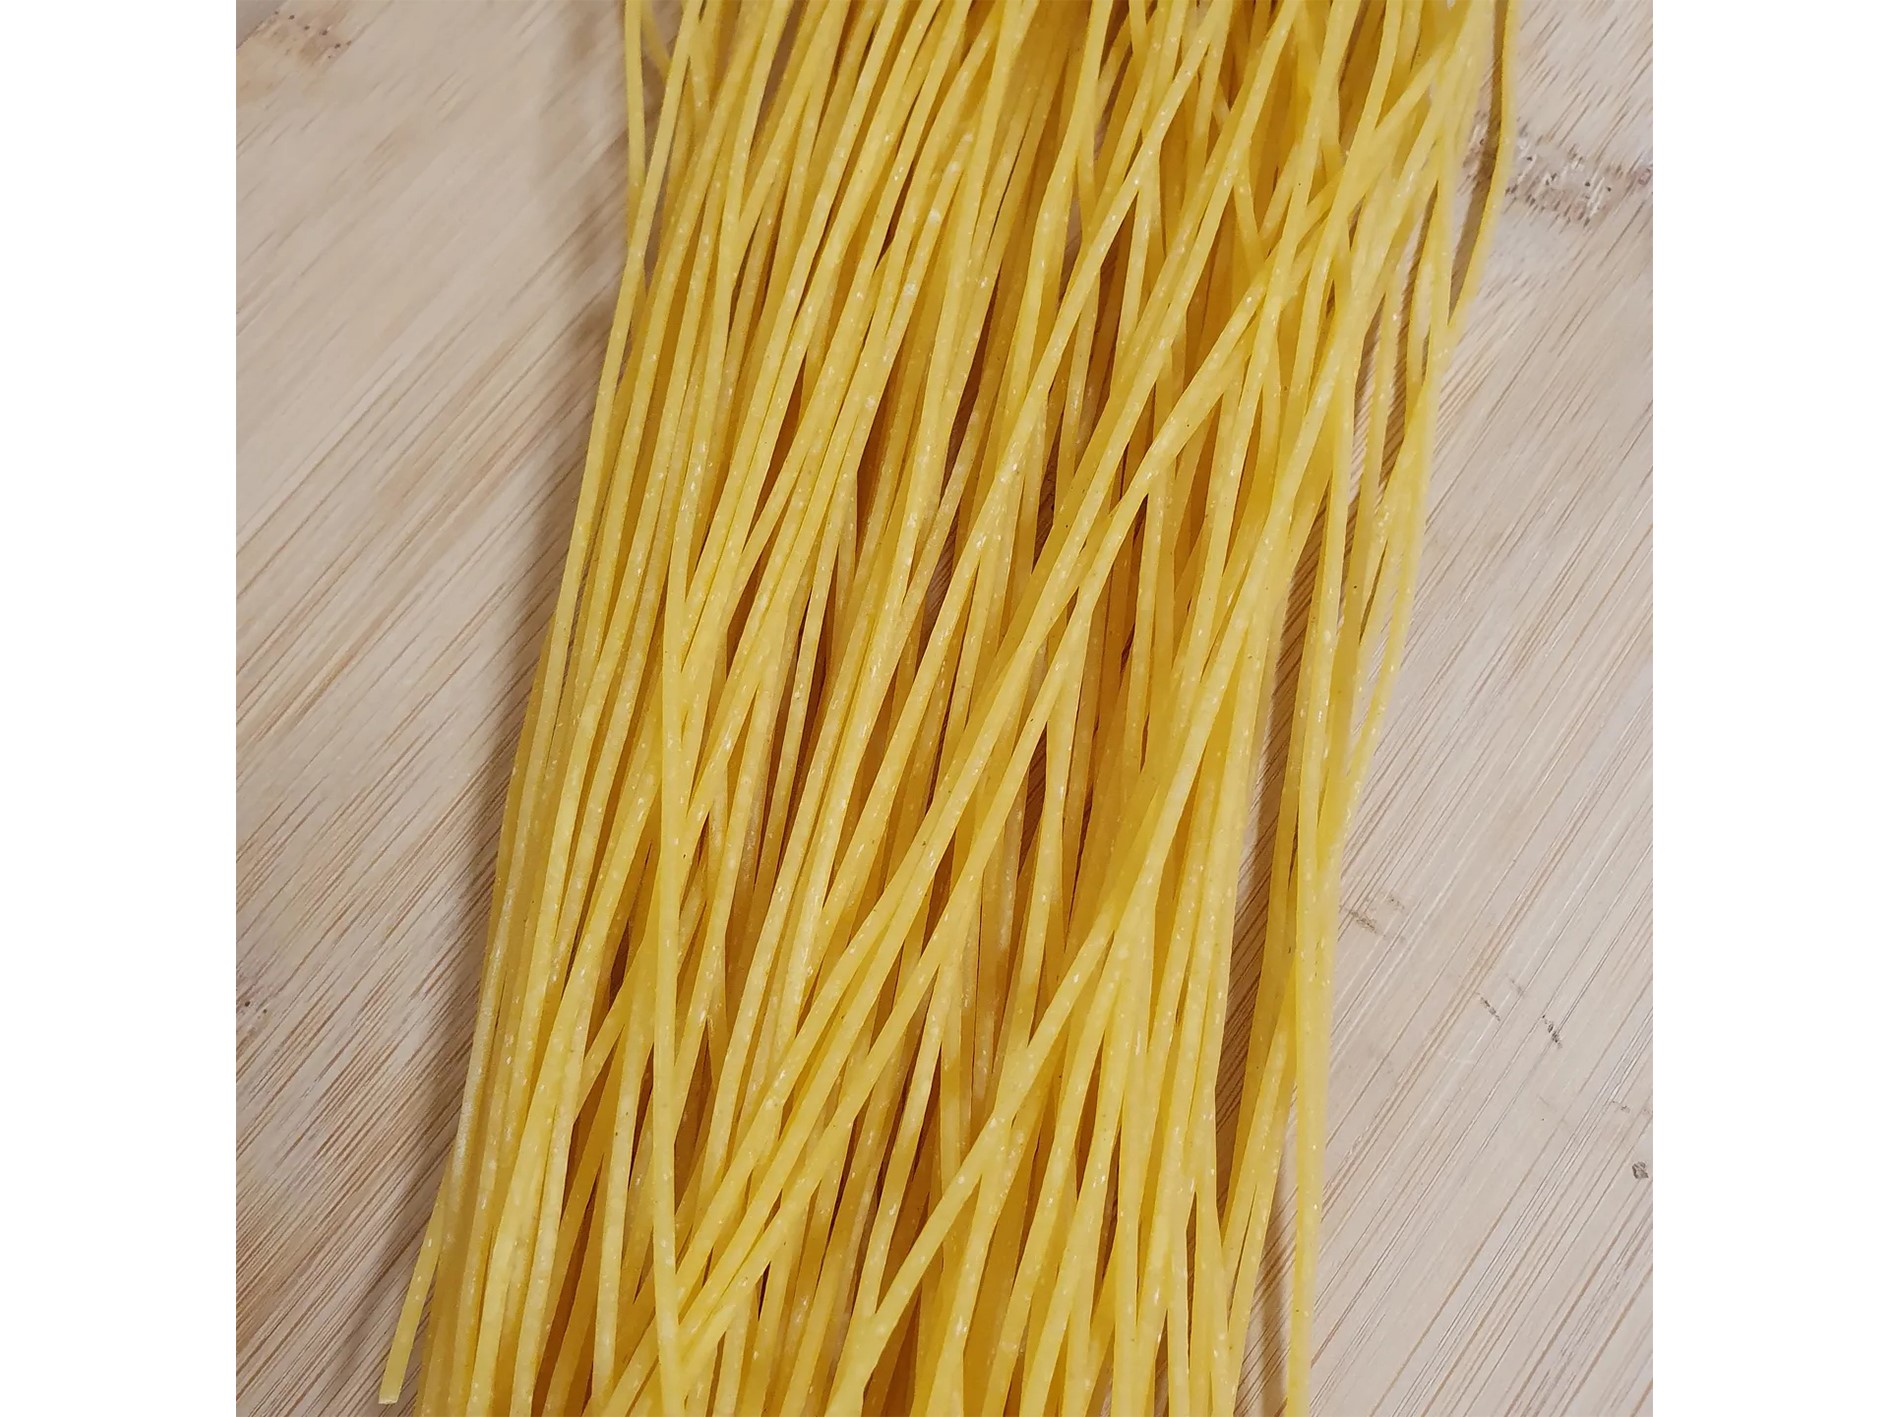 Dinkel Spaghetti | 500 g